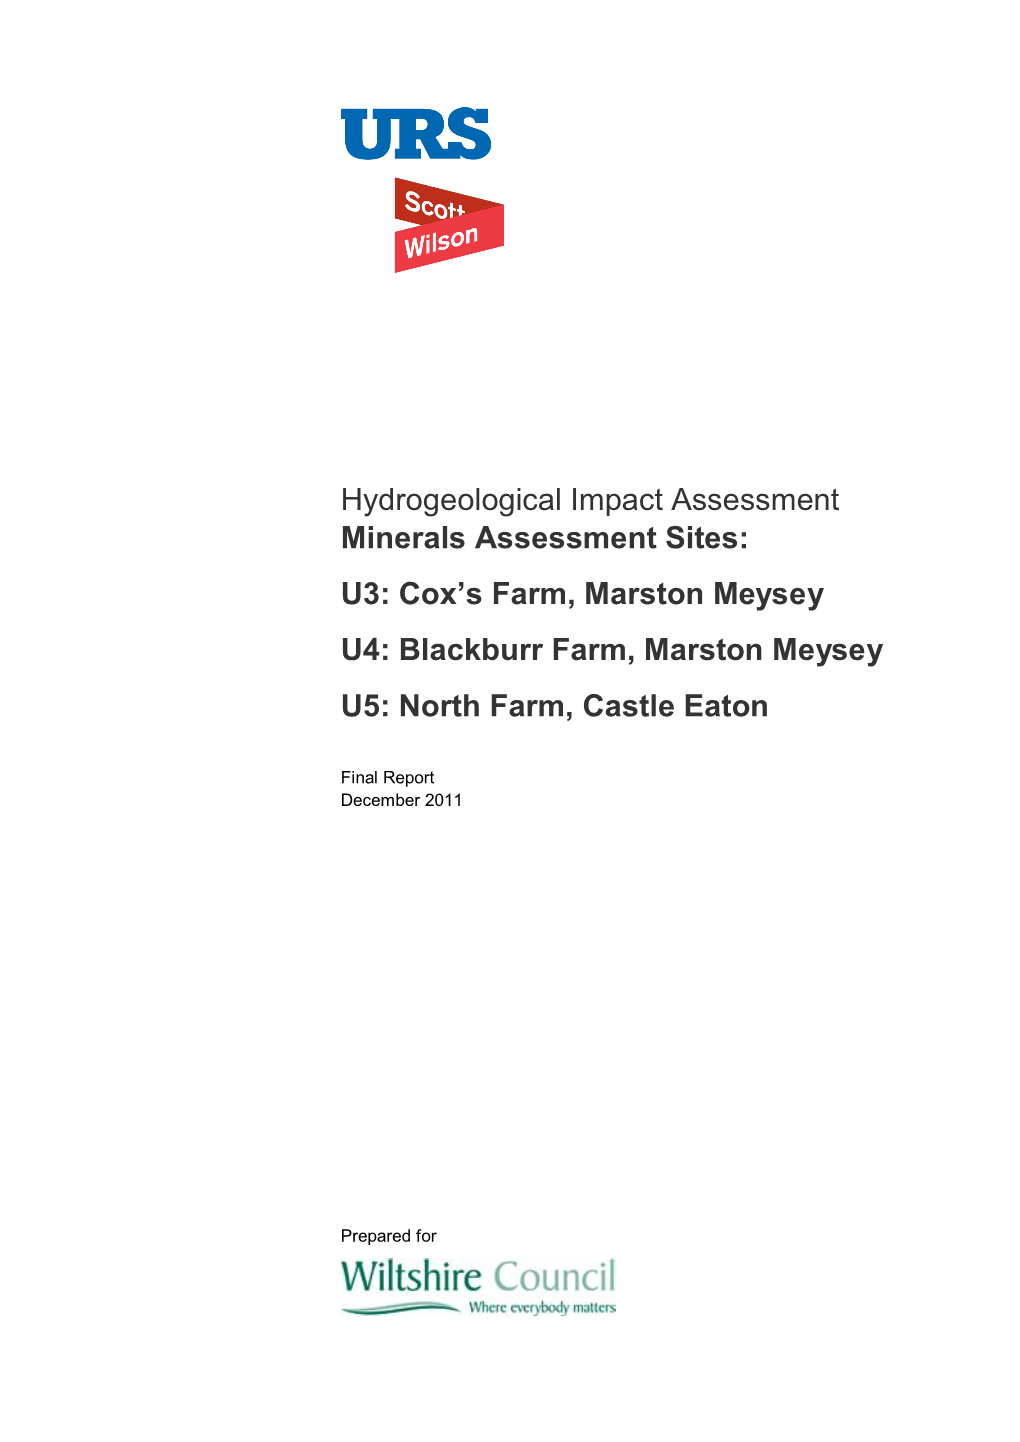 Hydrogeological Impact Assessment Minerals Assessment Sites: U3: Cox’S Farm, Marston Meysey U4: Blackburr Farm, Marston Meysey U5: North Farm, Castle Eaton